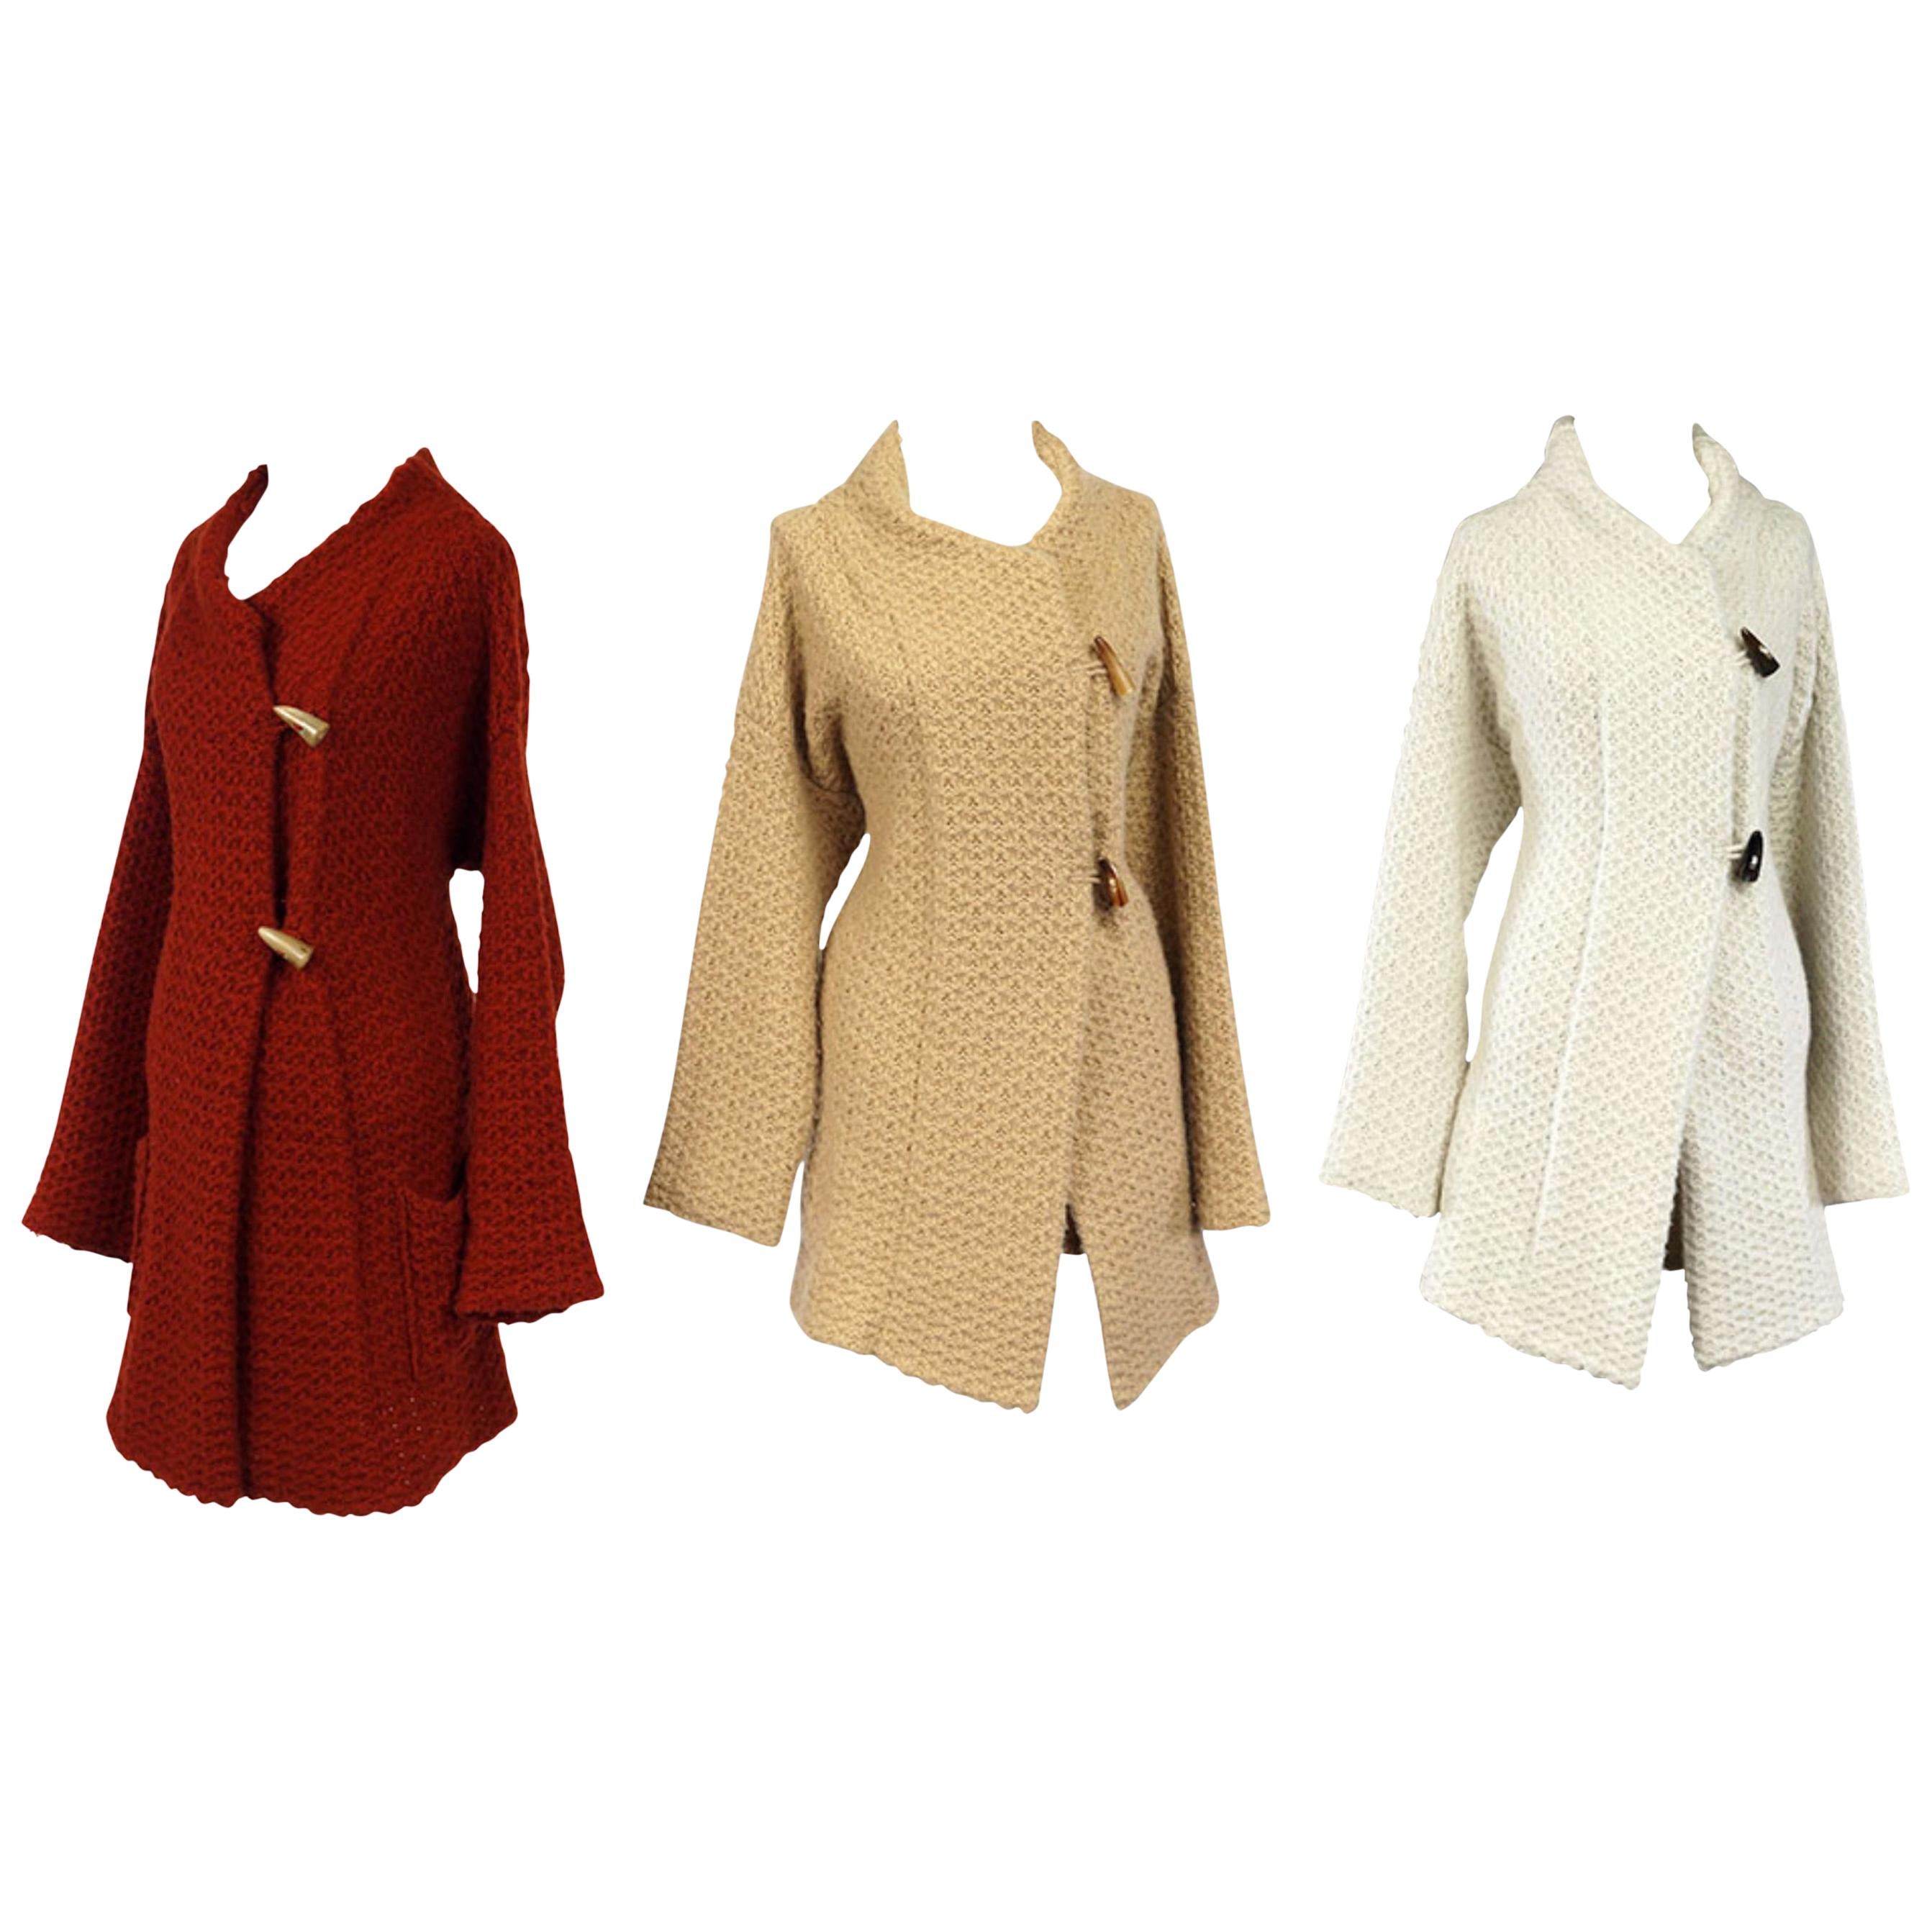 Three Sam Kori George Courture Atelier Cashmere Sweater Coats. Priced Per Piece 